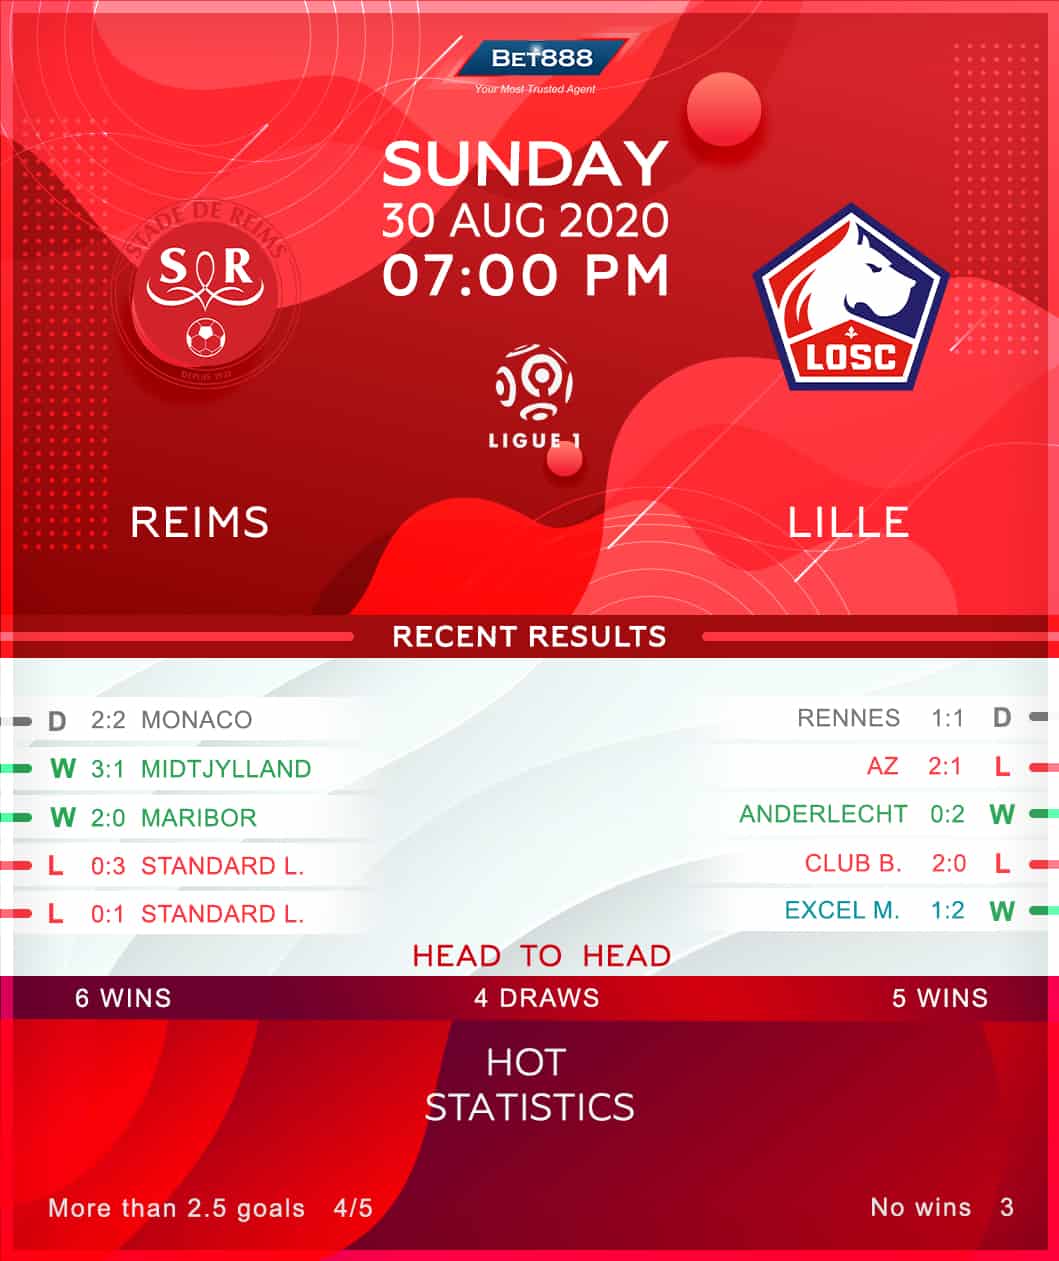 Reims vs Lille 30/08/20